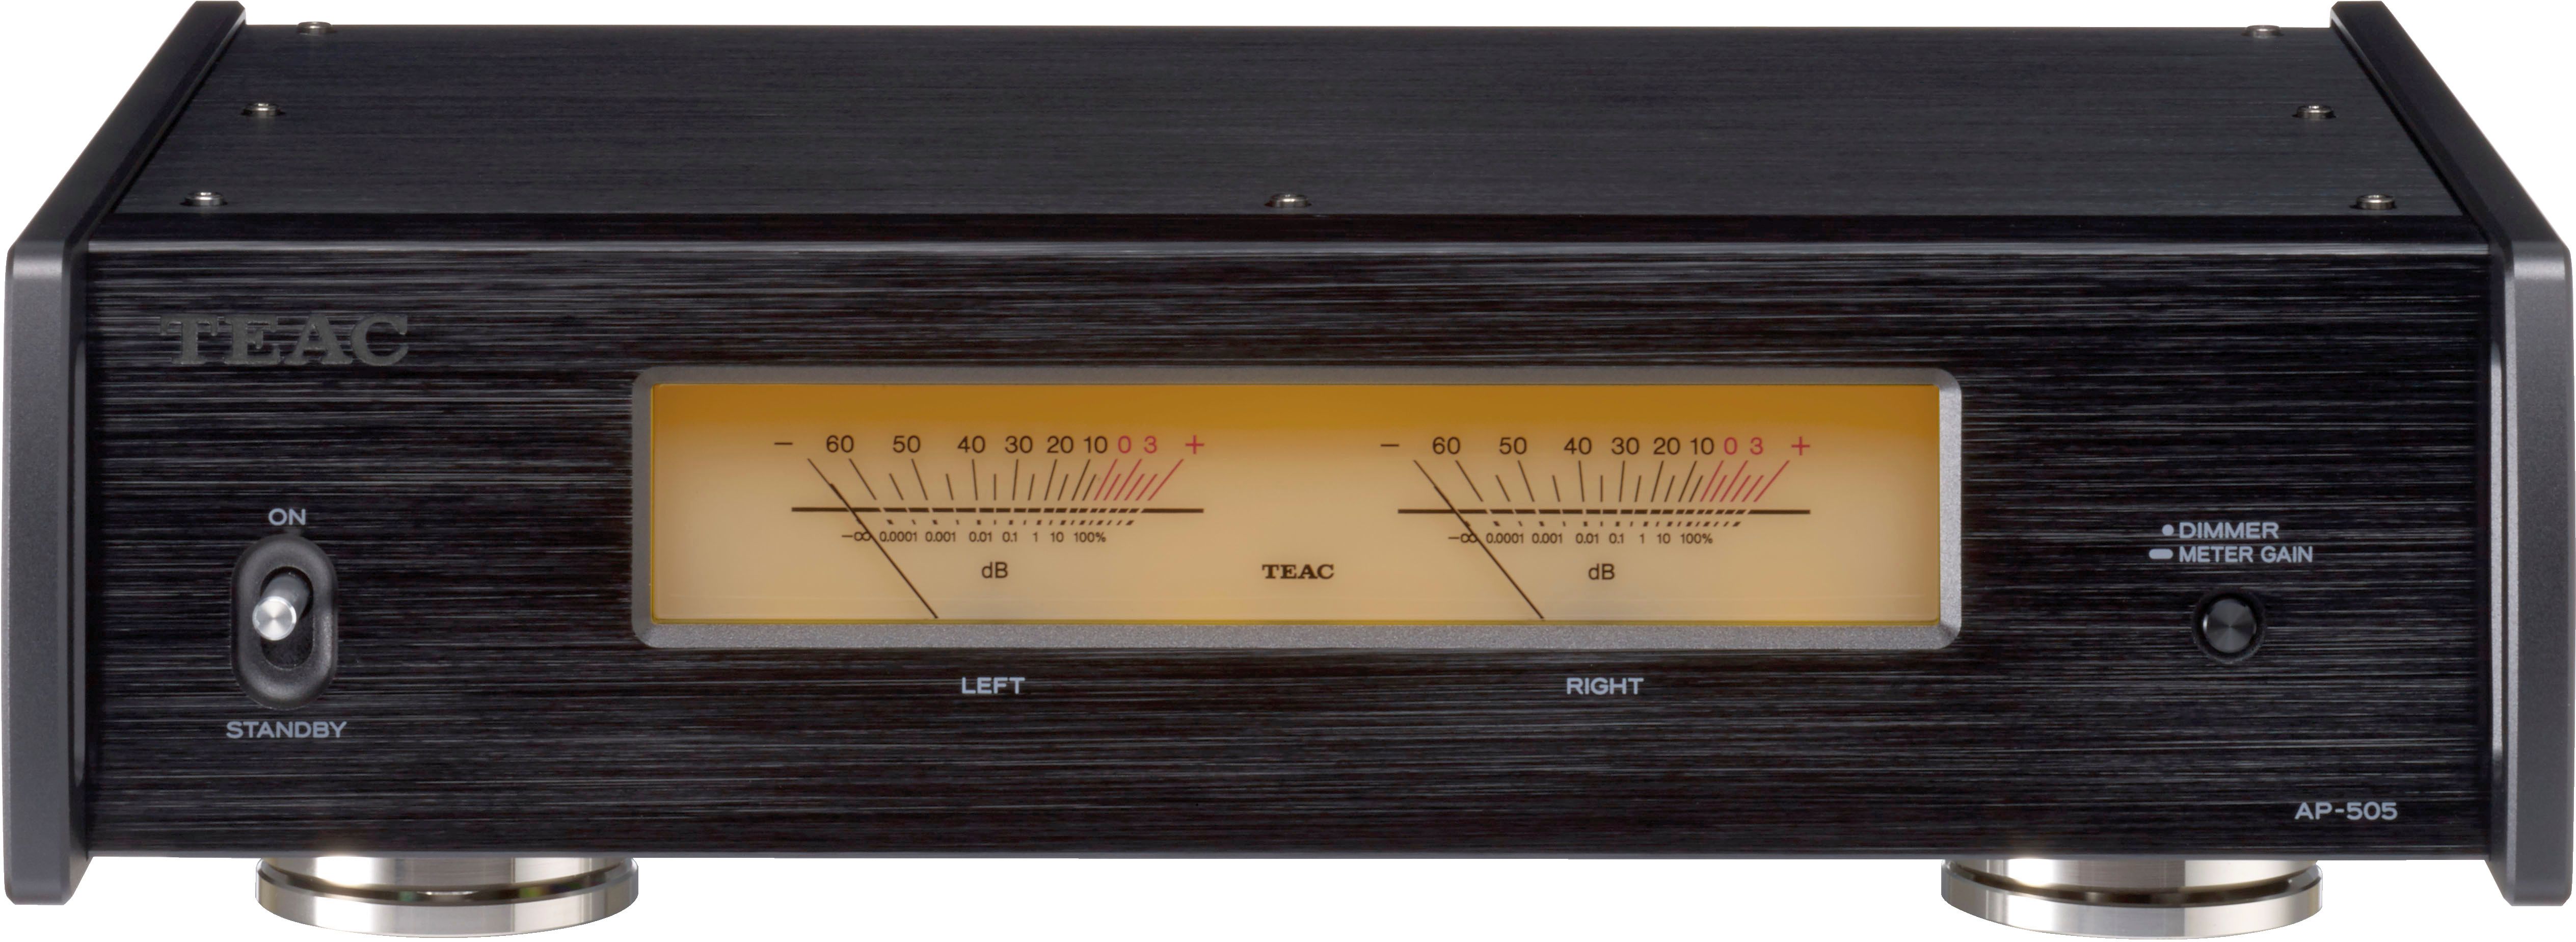 AP-505-B Teac - - Thali black Stereo-Amplifier